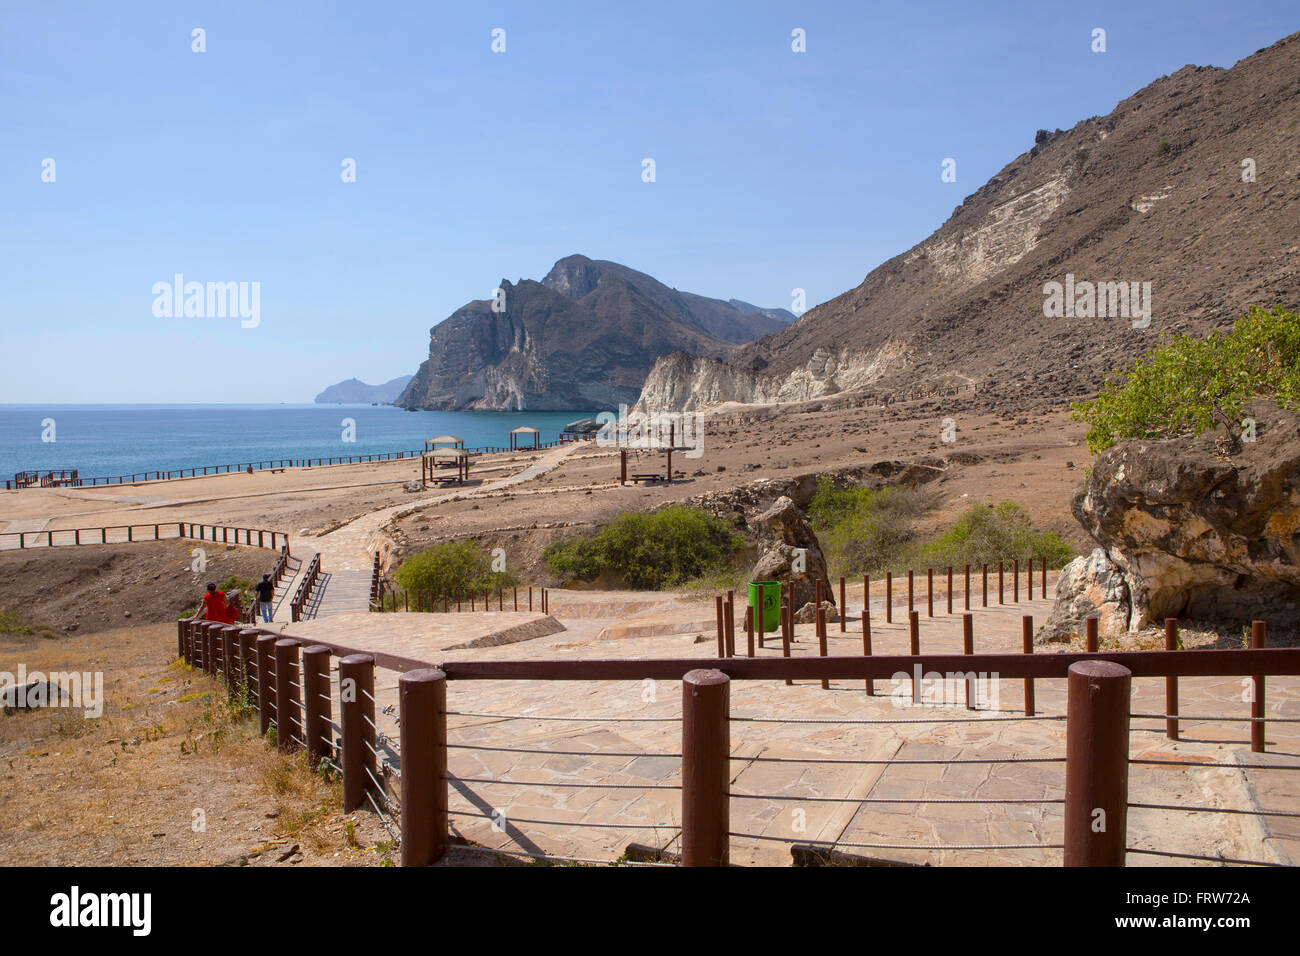 Al Mughsayl - beliebte Touristenziele in Dhofar, Oman. Stockfoto